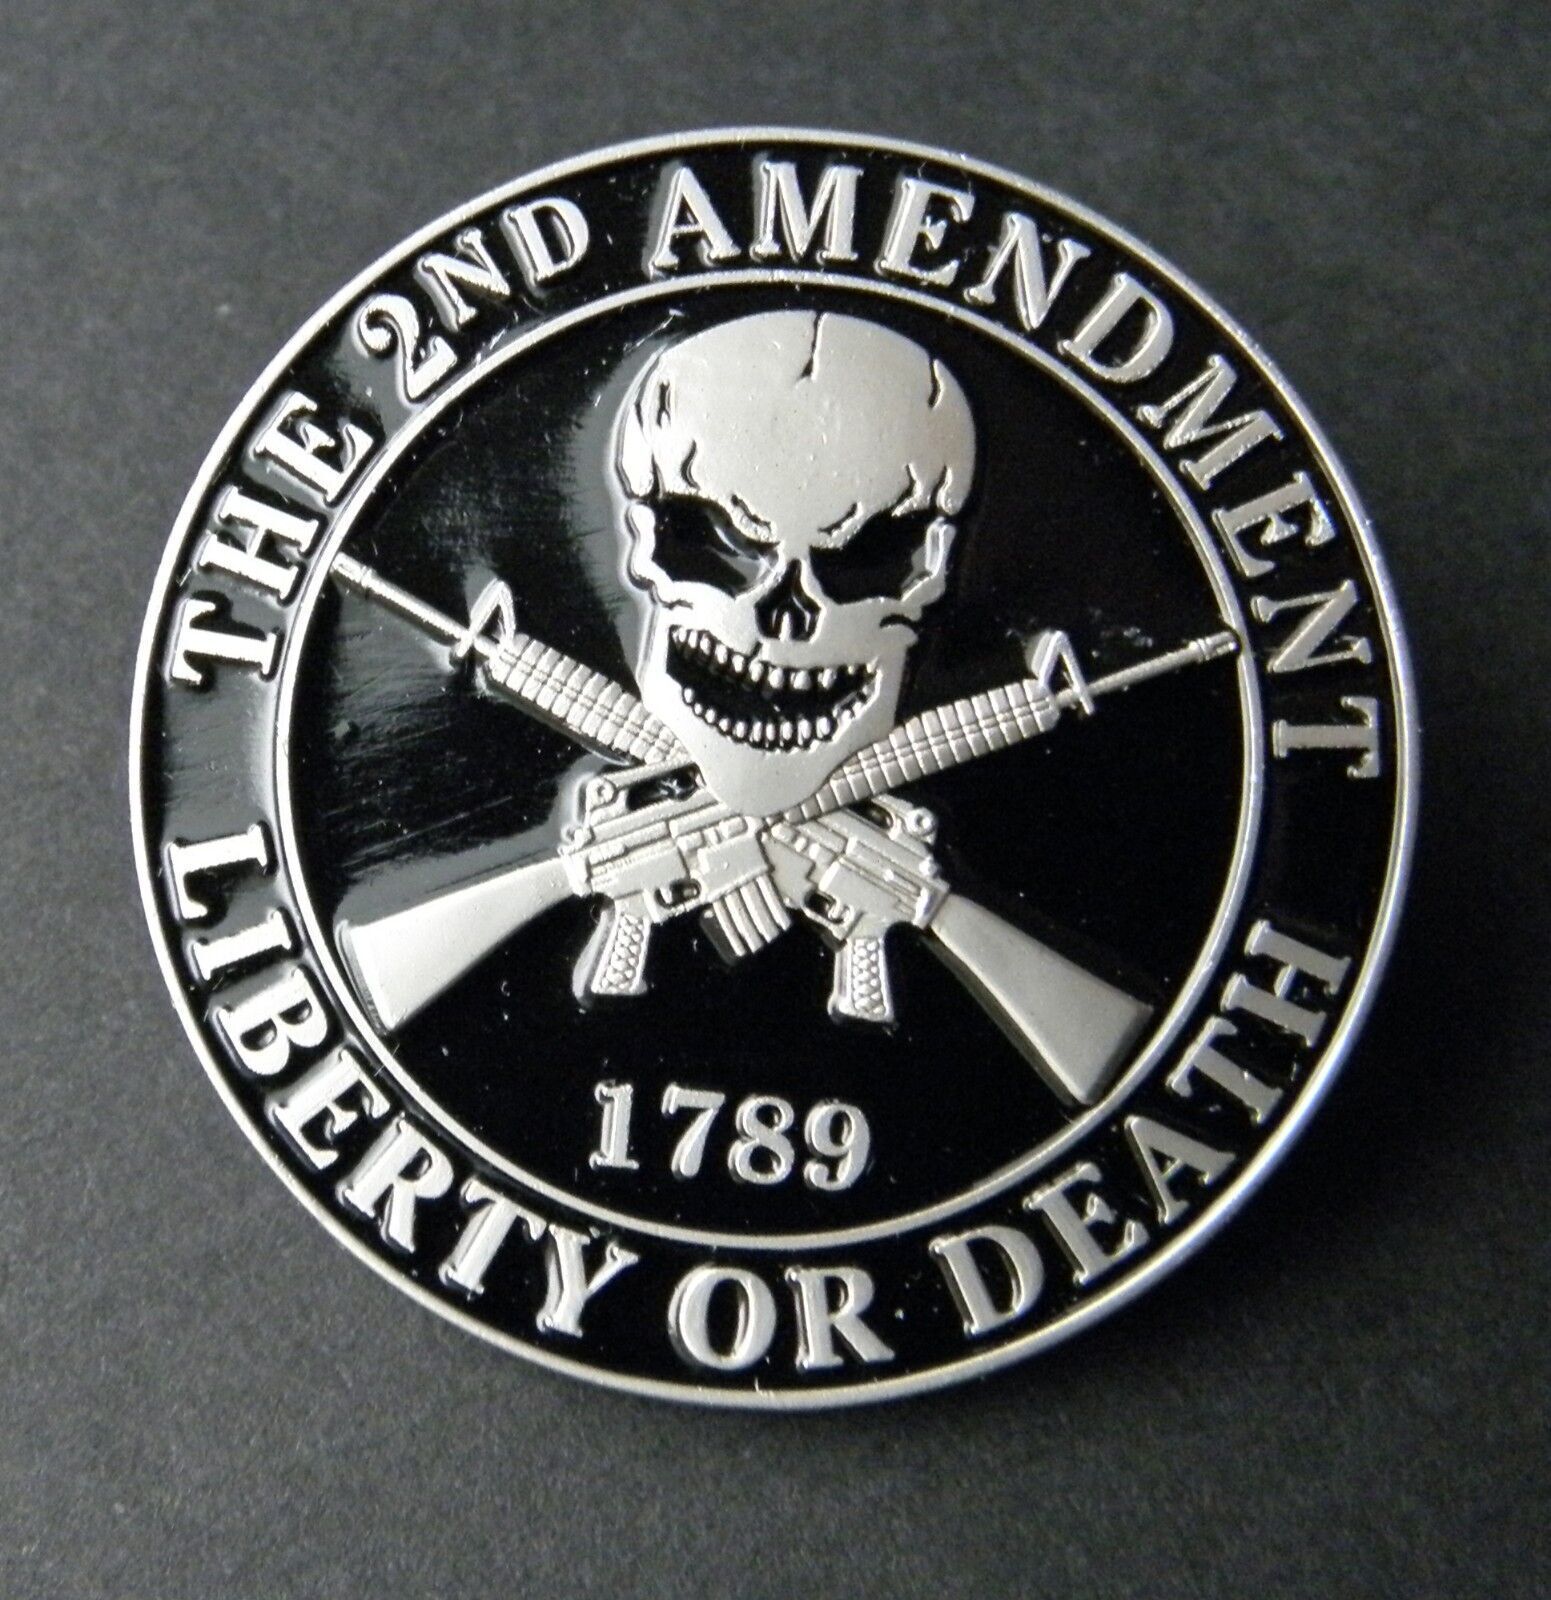 2nd Amendment 1789 Liberty or Death Skull Crossed Rifles Hat Pin Badge 1.5 inch